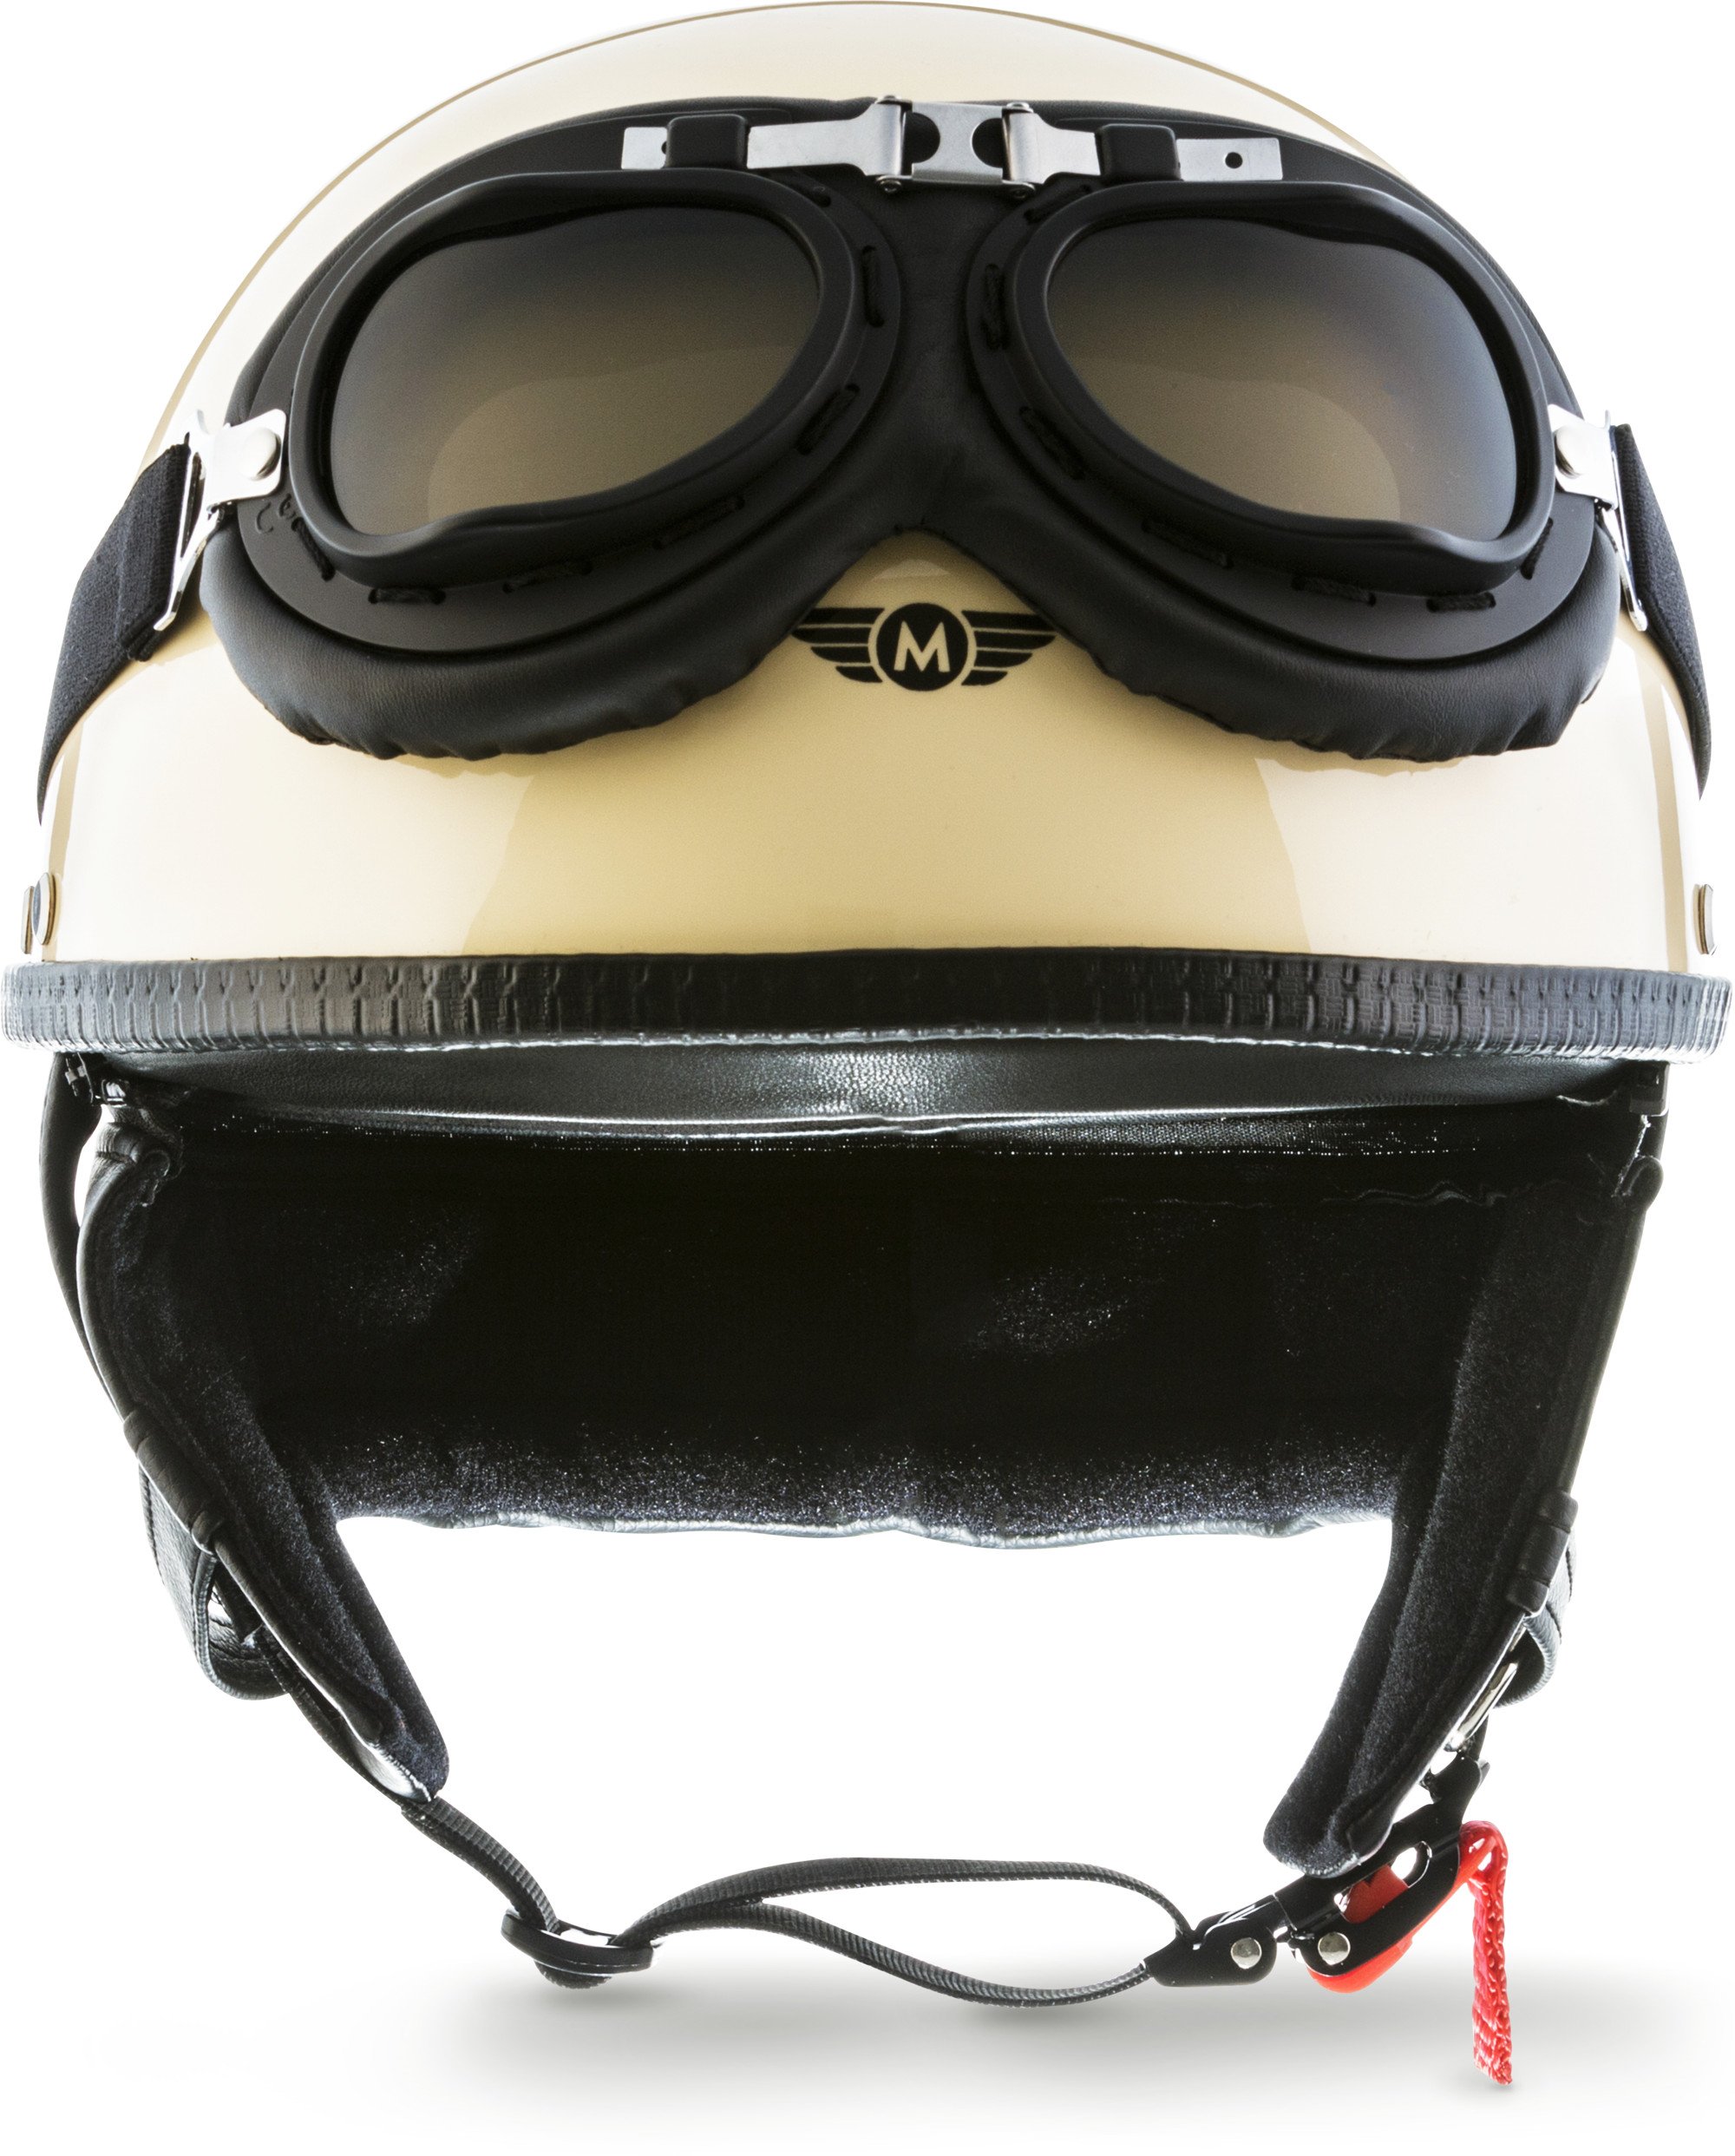 Moto Helmets® D22-Set „Creme“ · Brain-Cap · Halbschale Jet-Helm Motorrad-Helm Roller-Helm Scooter-Helm Bobber Mofa-Helm Chopper Retro Cruiser Vintage Pilot Biker Helmet Brille Visier · M (57-58cm)